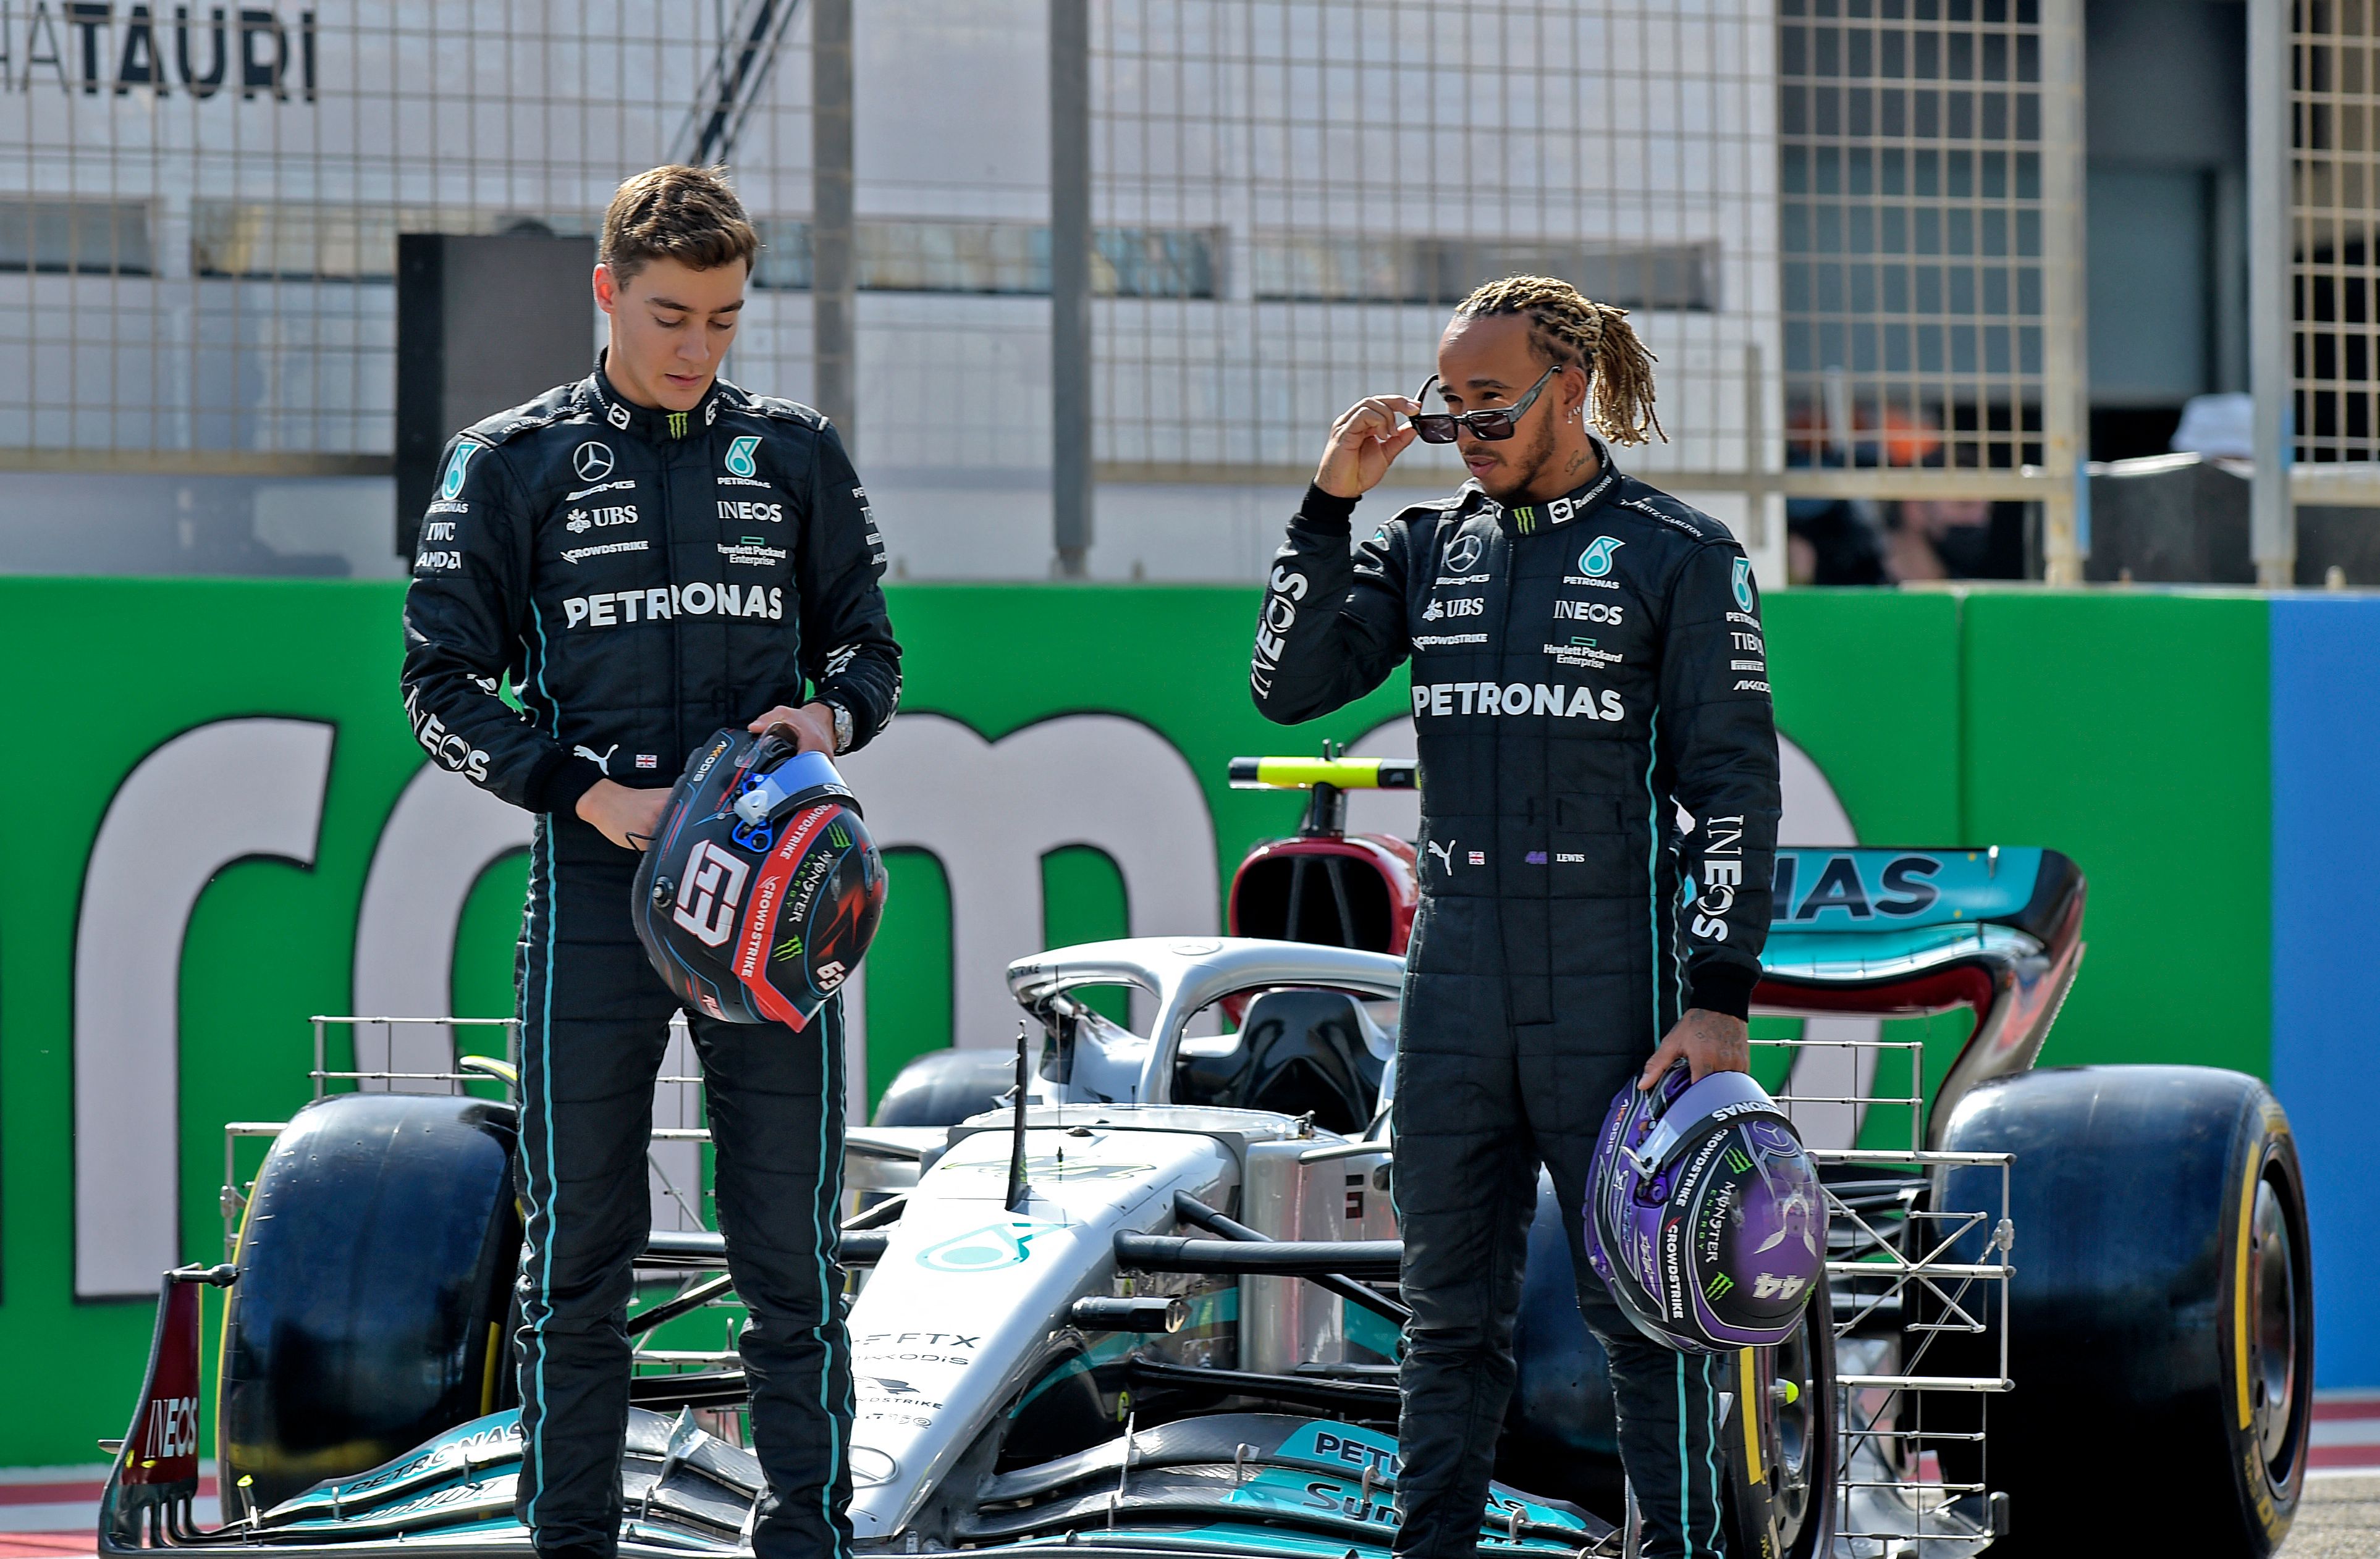 Lewis Hamilton may not win a race this season, fears Nico Rosberg